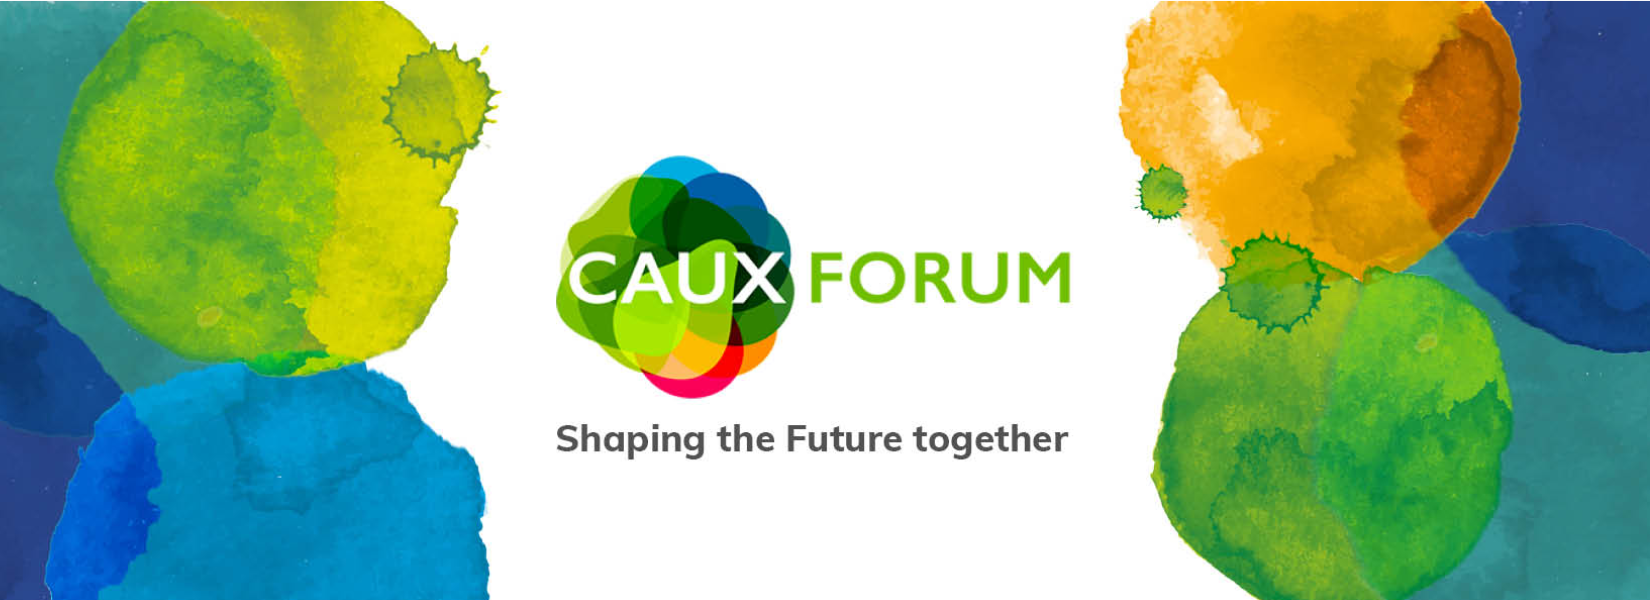 Caux Forum general banner 2022.png